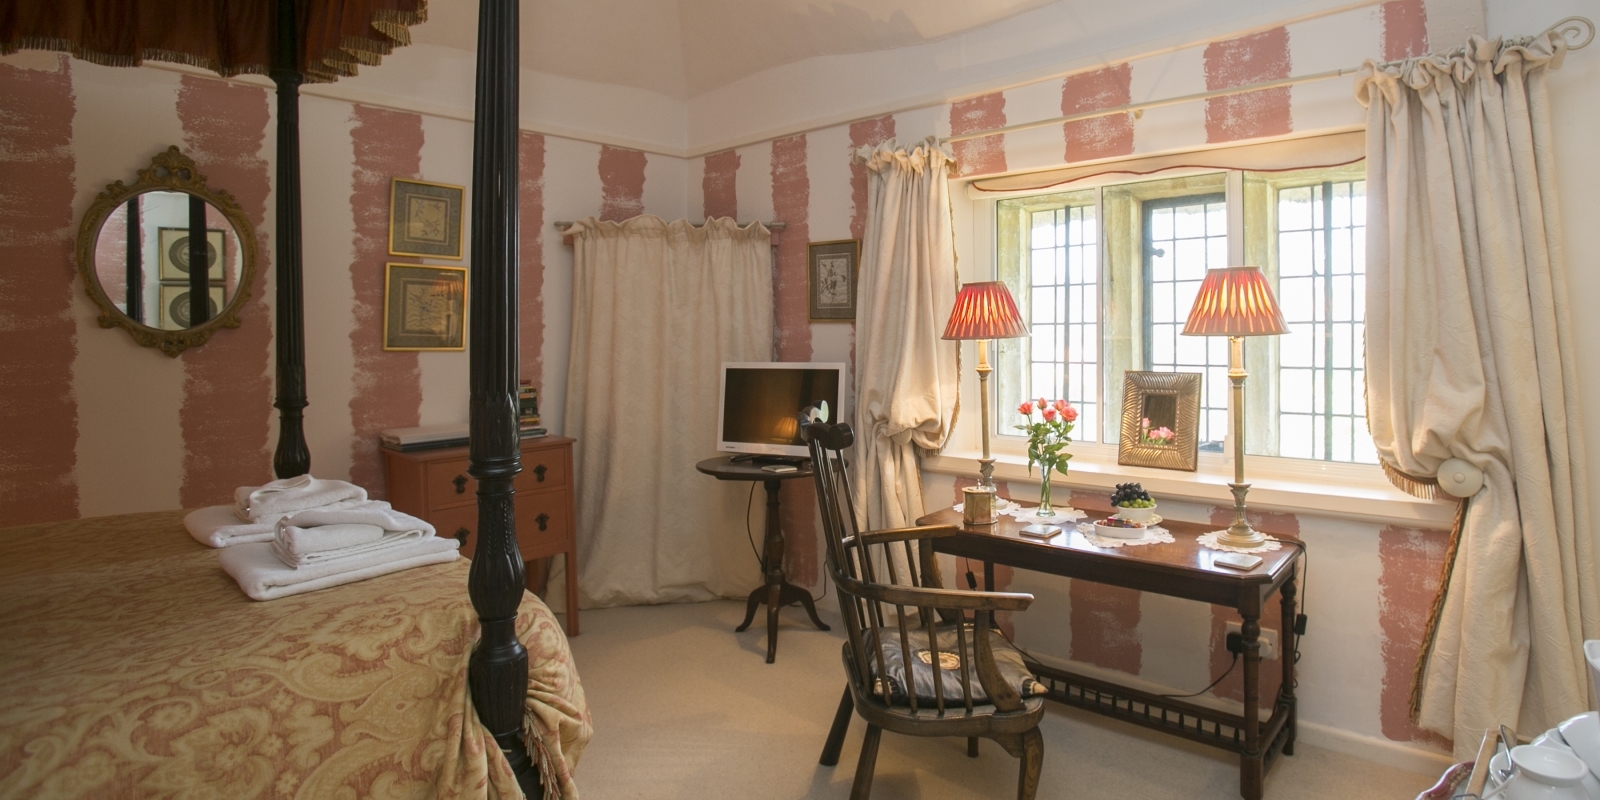 Four-poster bedroom at Tudor Cottage Guest House Dorchester